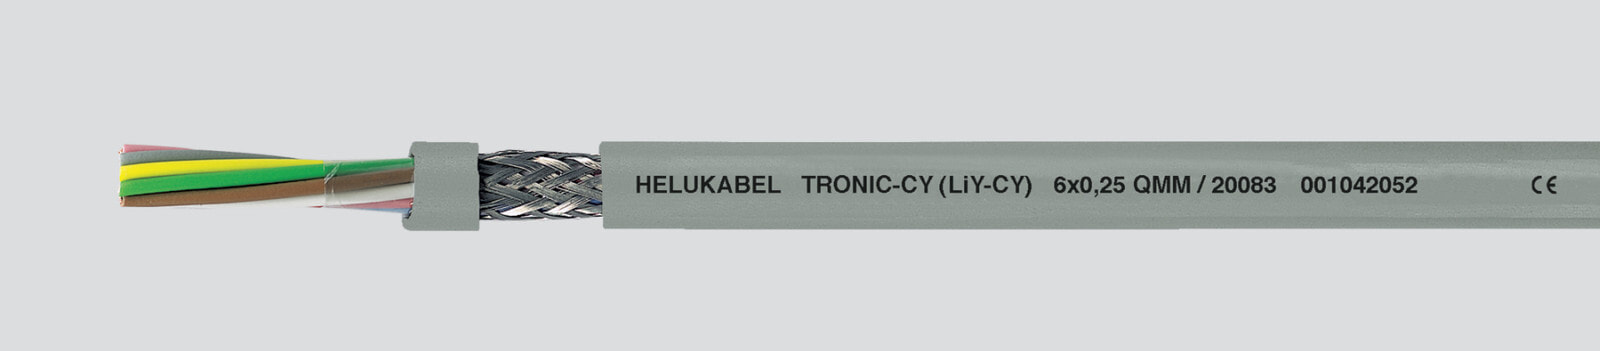 Helukabel 20066 - Low voltage cable - Grey - Cooper - 0.34 mm² - 103 kg/km - -5 - 80 °C